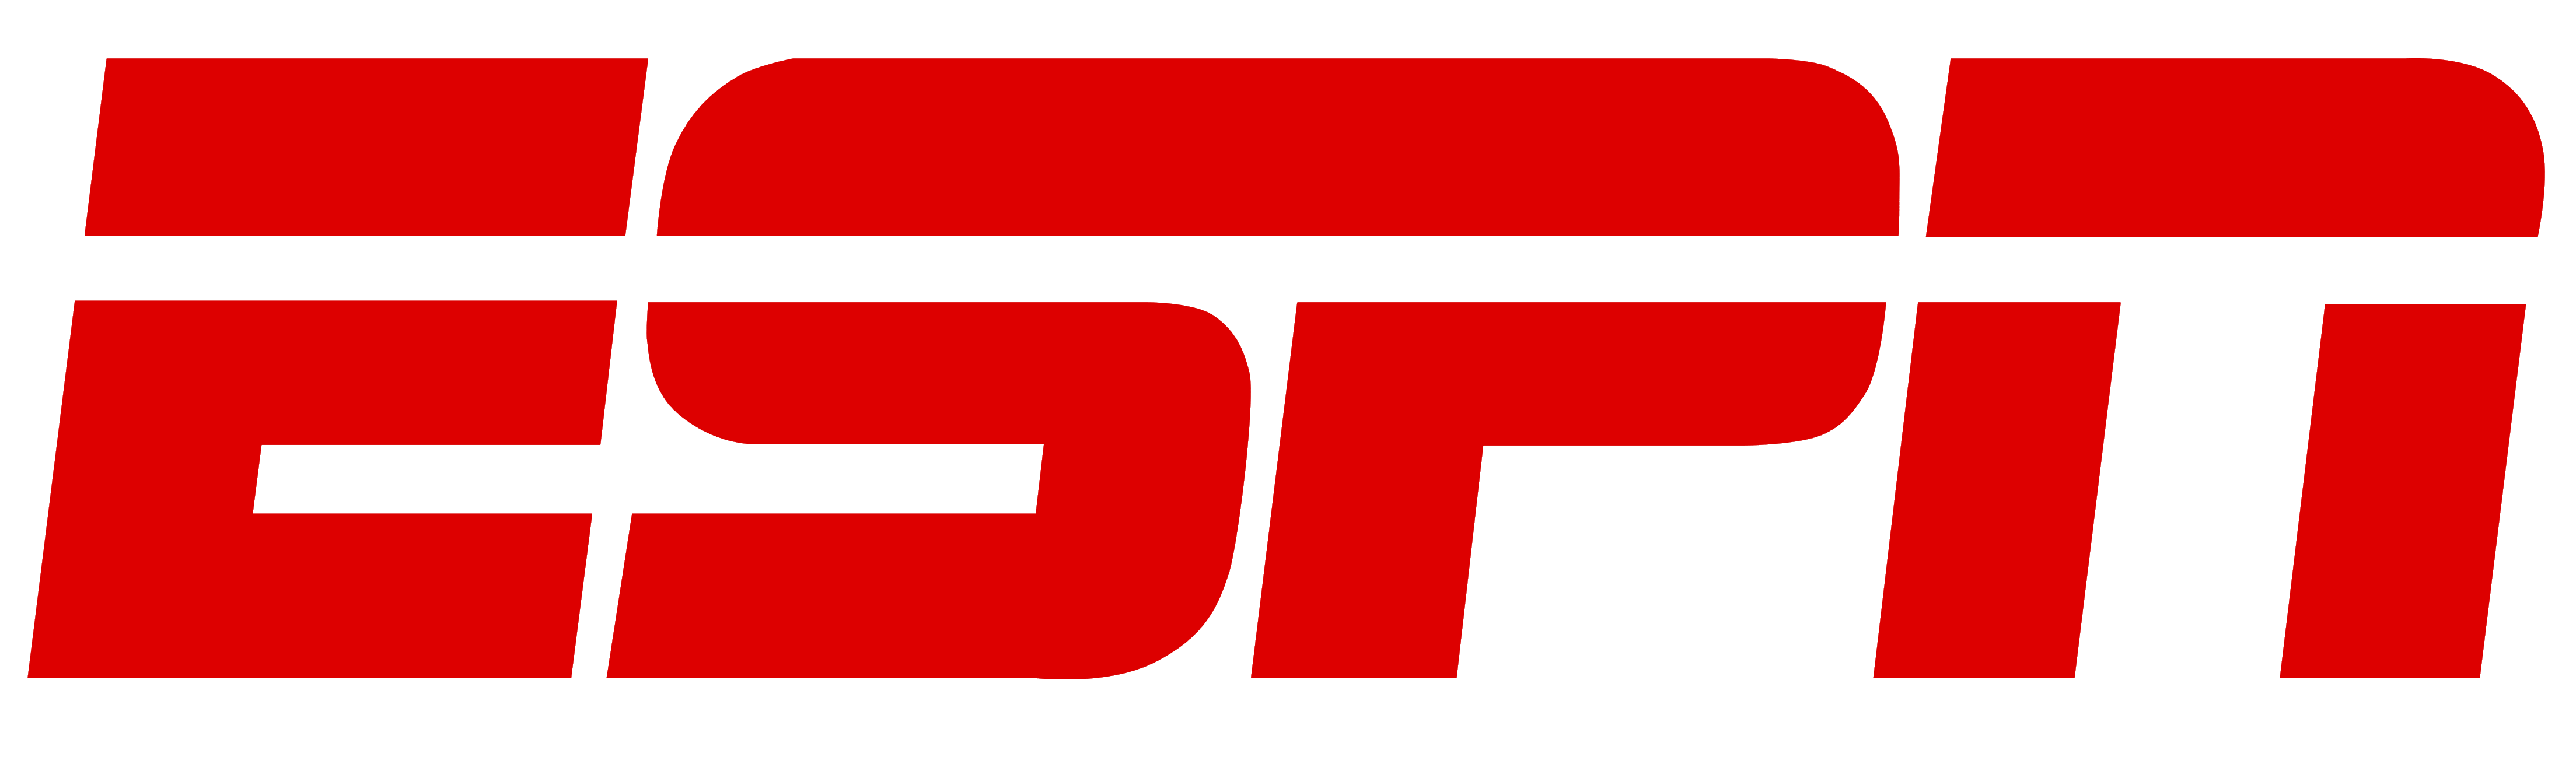 ESPN logo, logotype